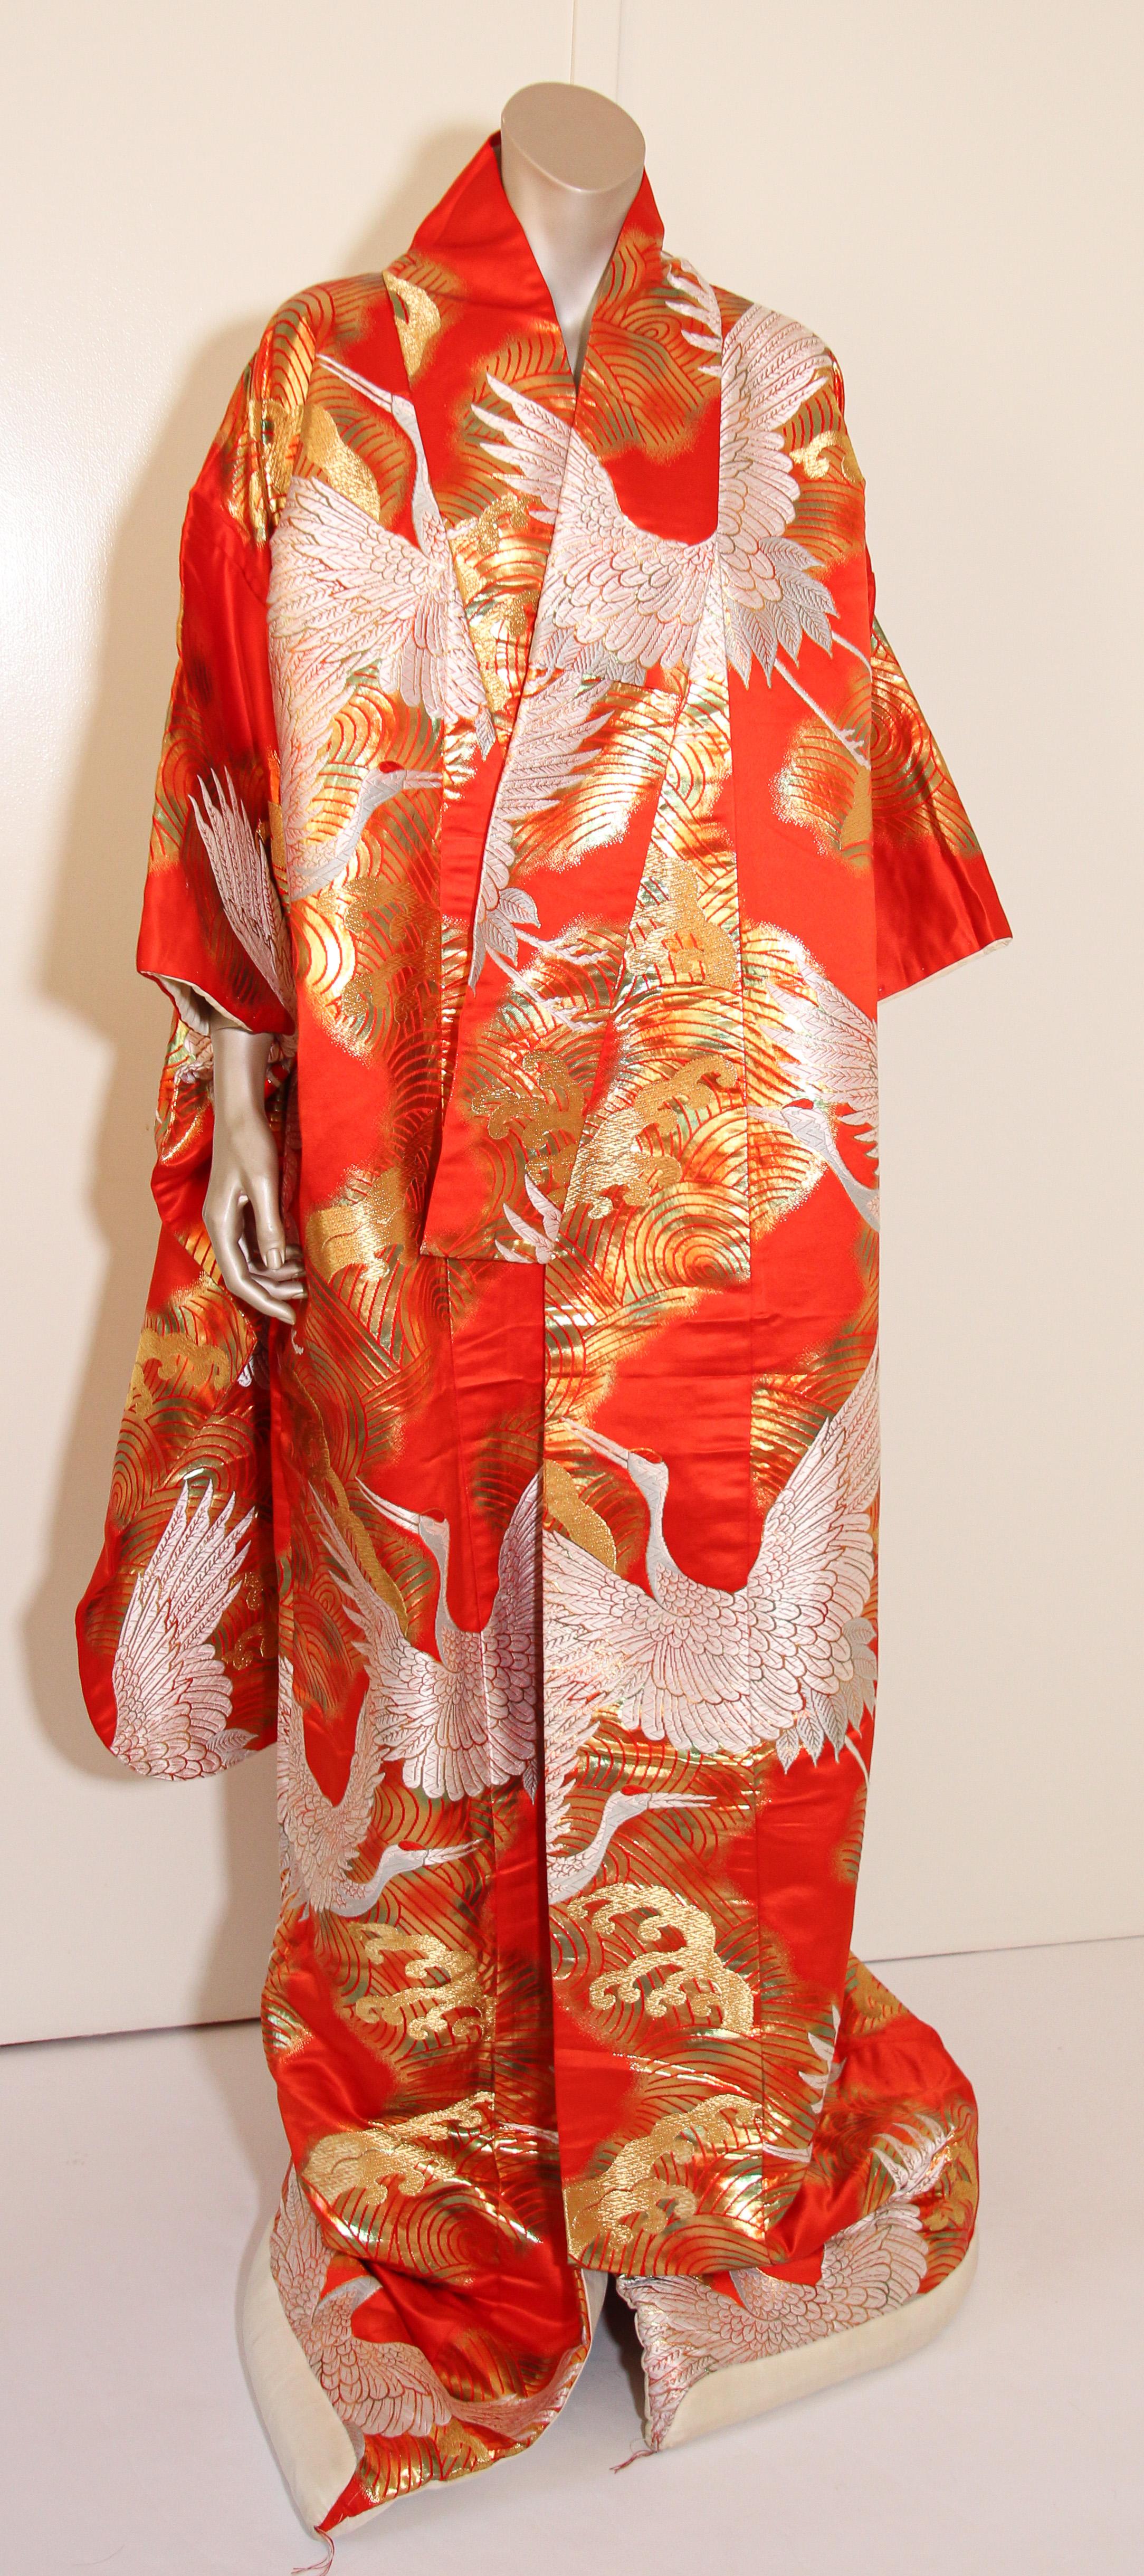 Vintage Red Silk Brocade Japanese Ceremonial Wedding Kimono For Sale At 1stdibs